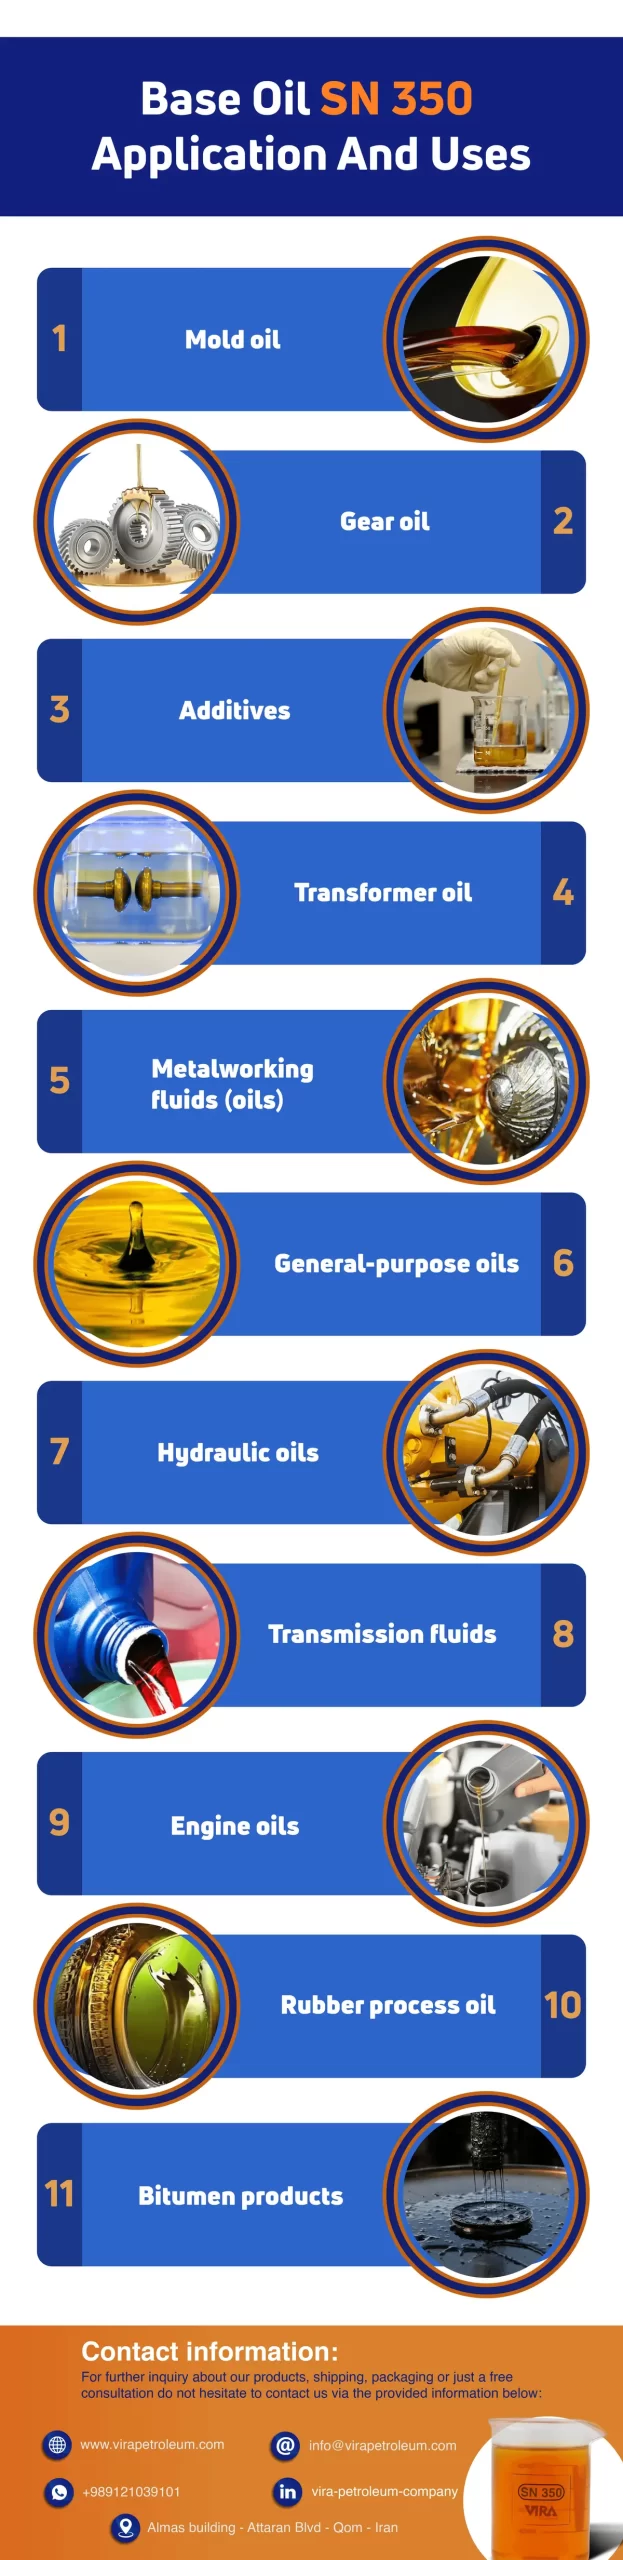 application of base oil SN 150